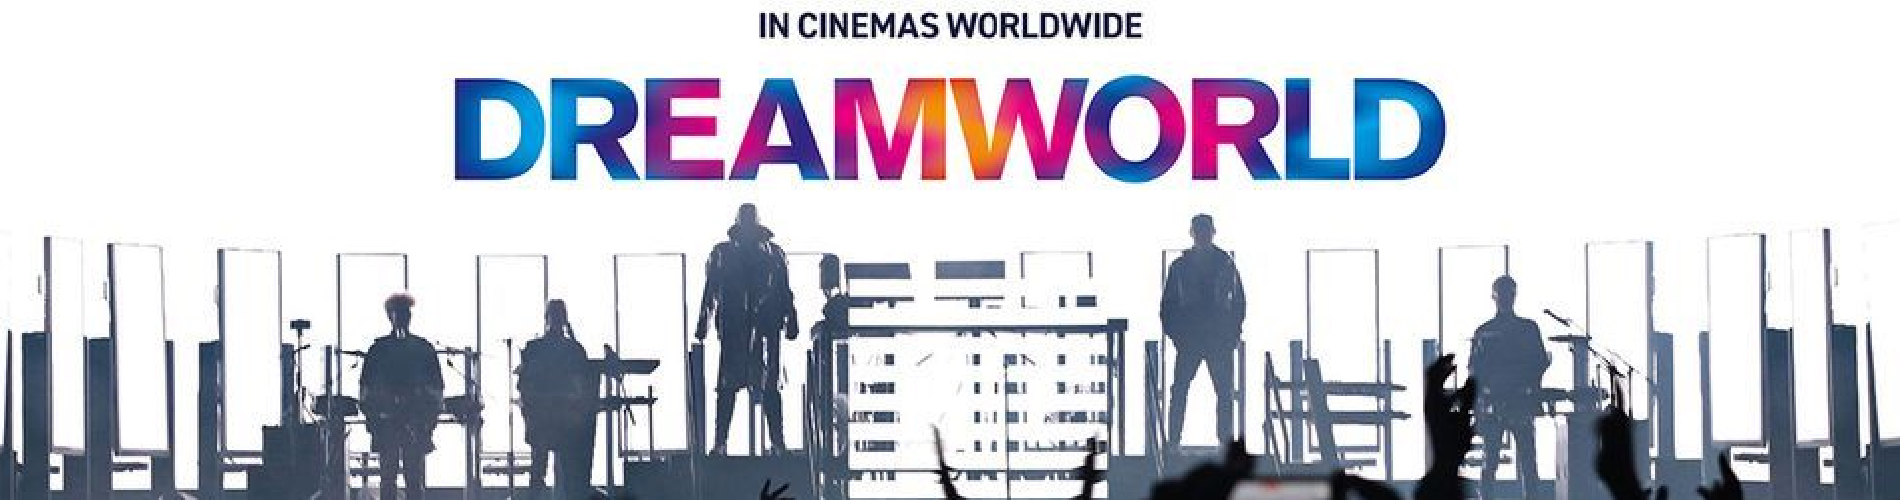 Pet Shop Boys Dreamworld: The Greatest Hits Live at Royal Arena Copenhagen